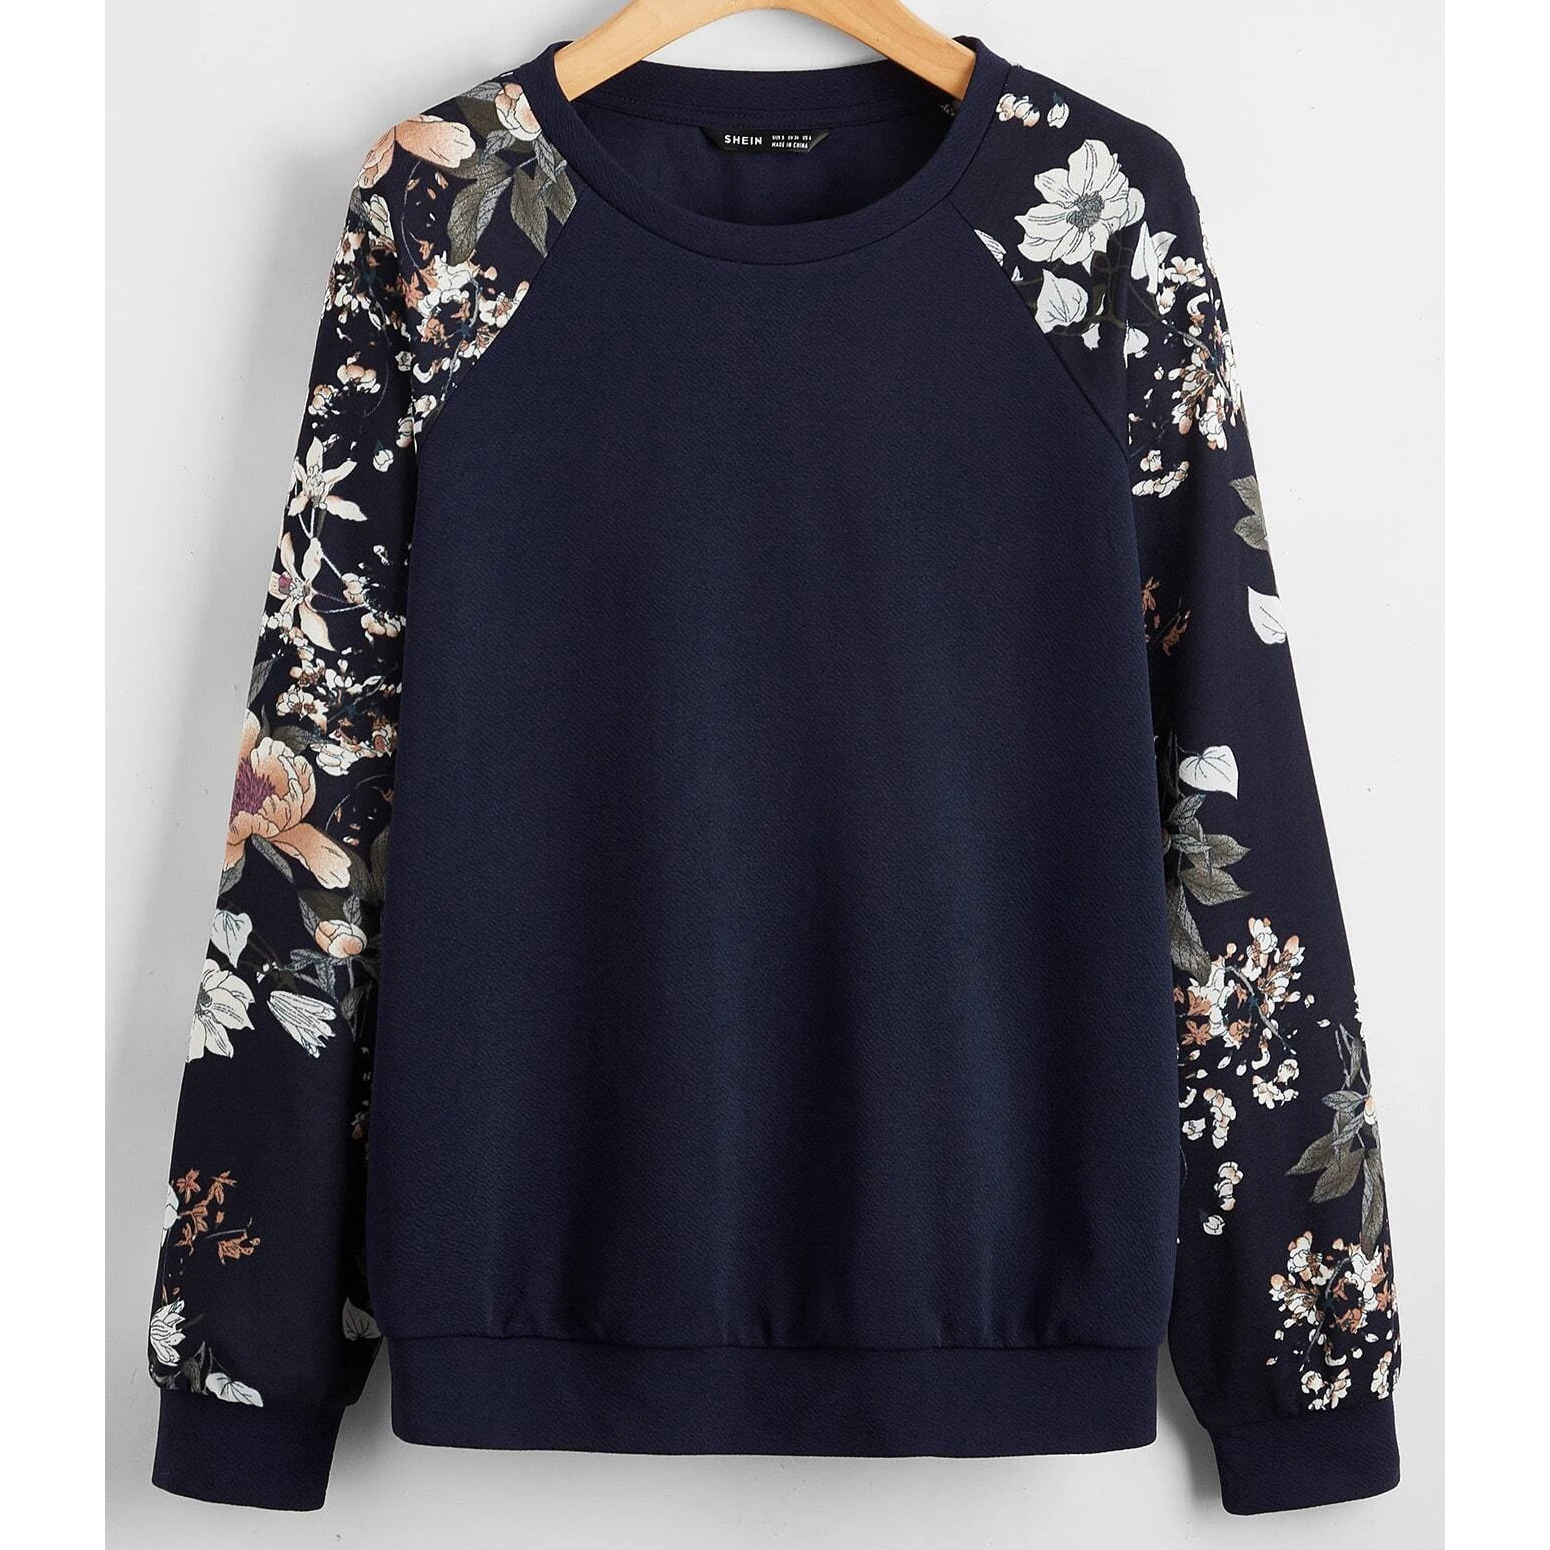 Floral Raglan Sleeve Pullover - Small(4)